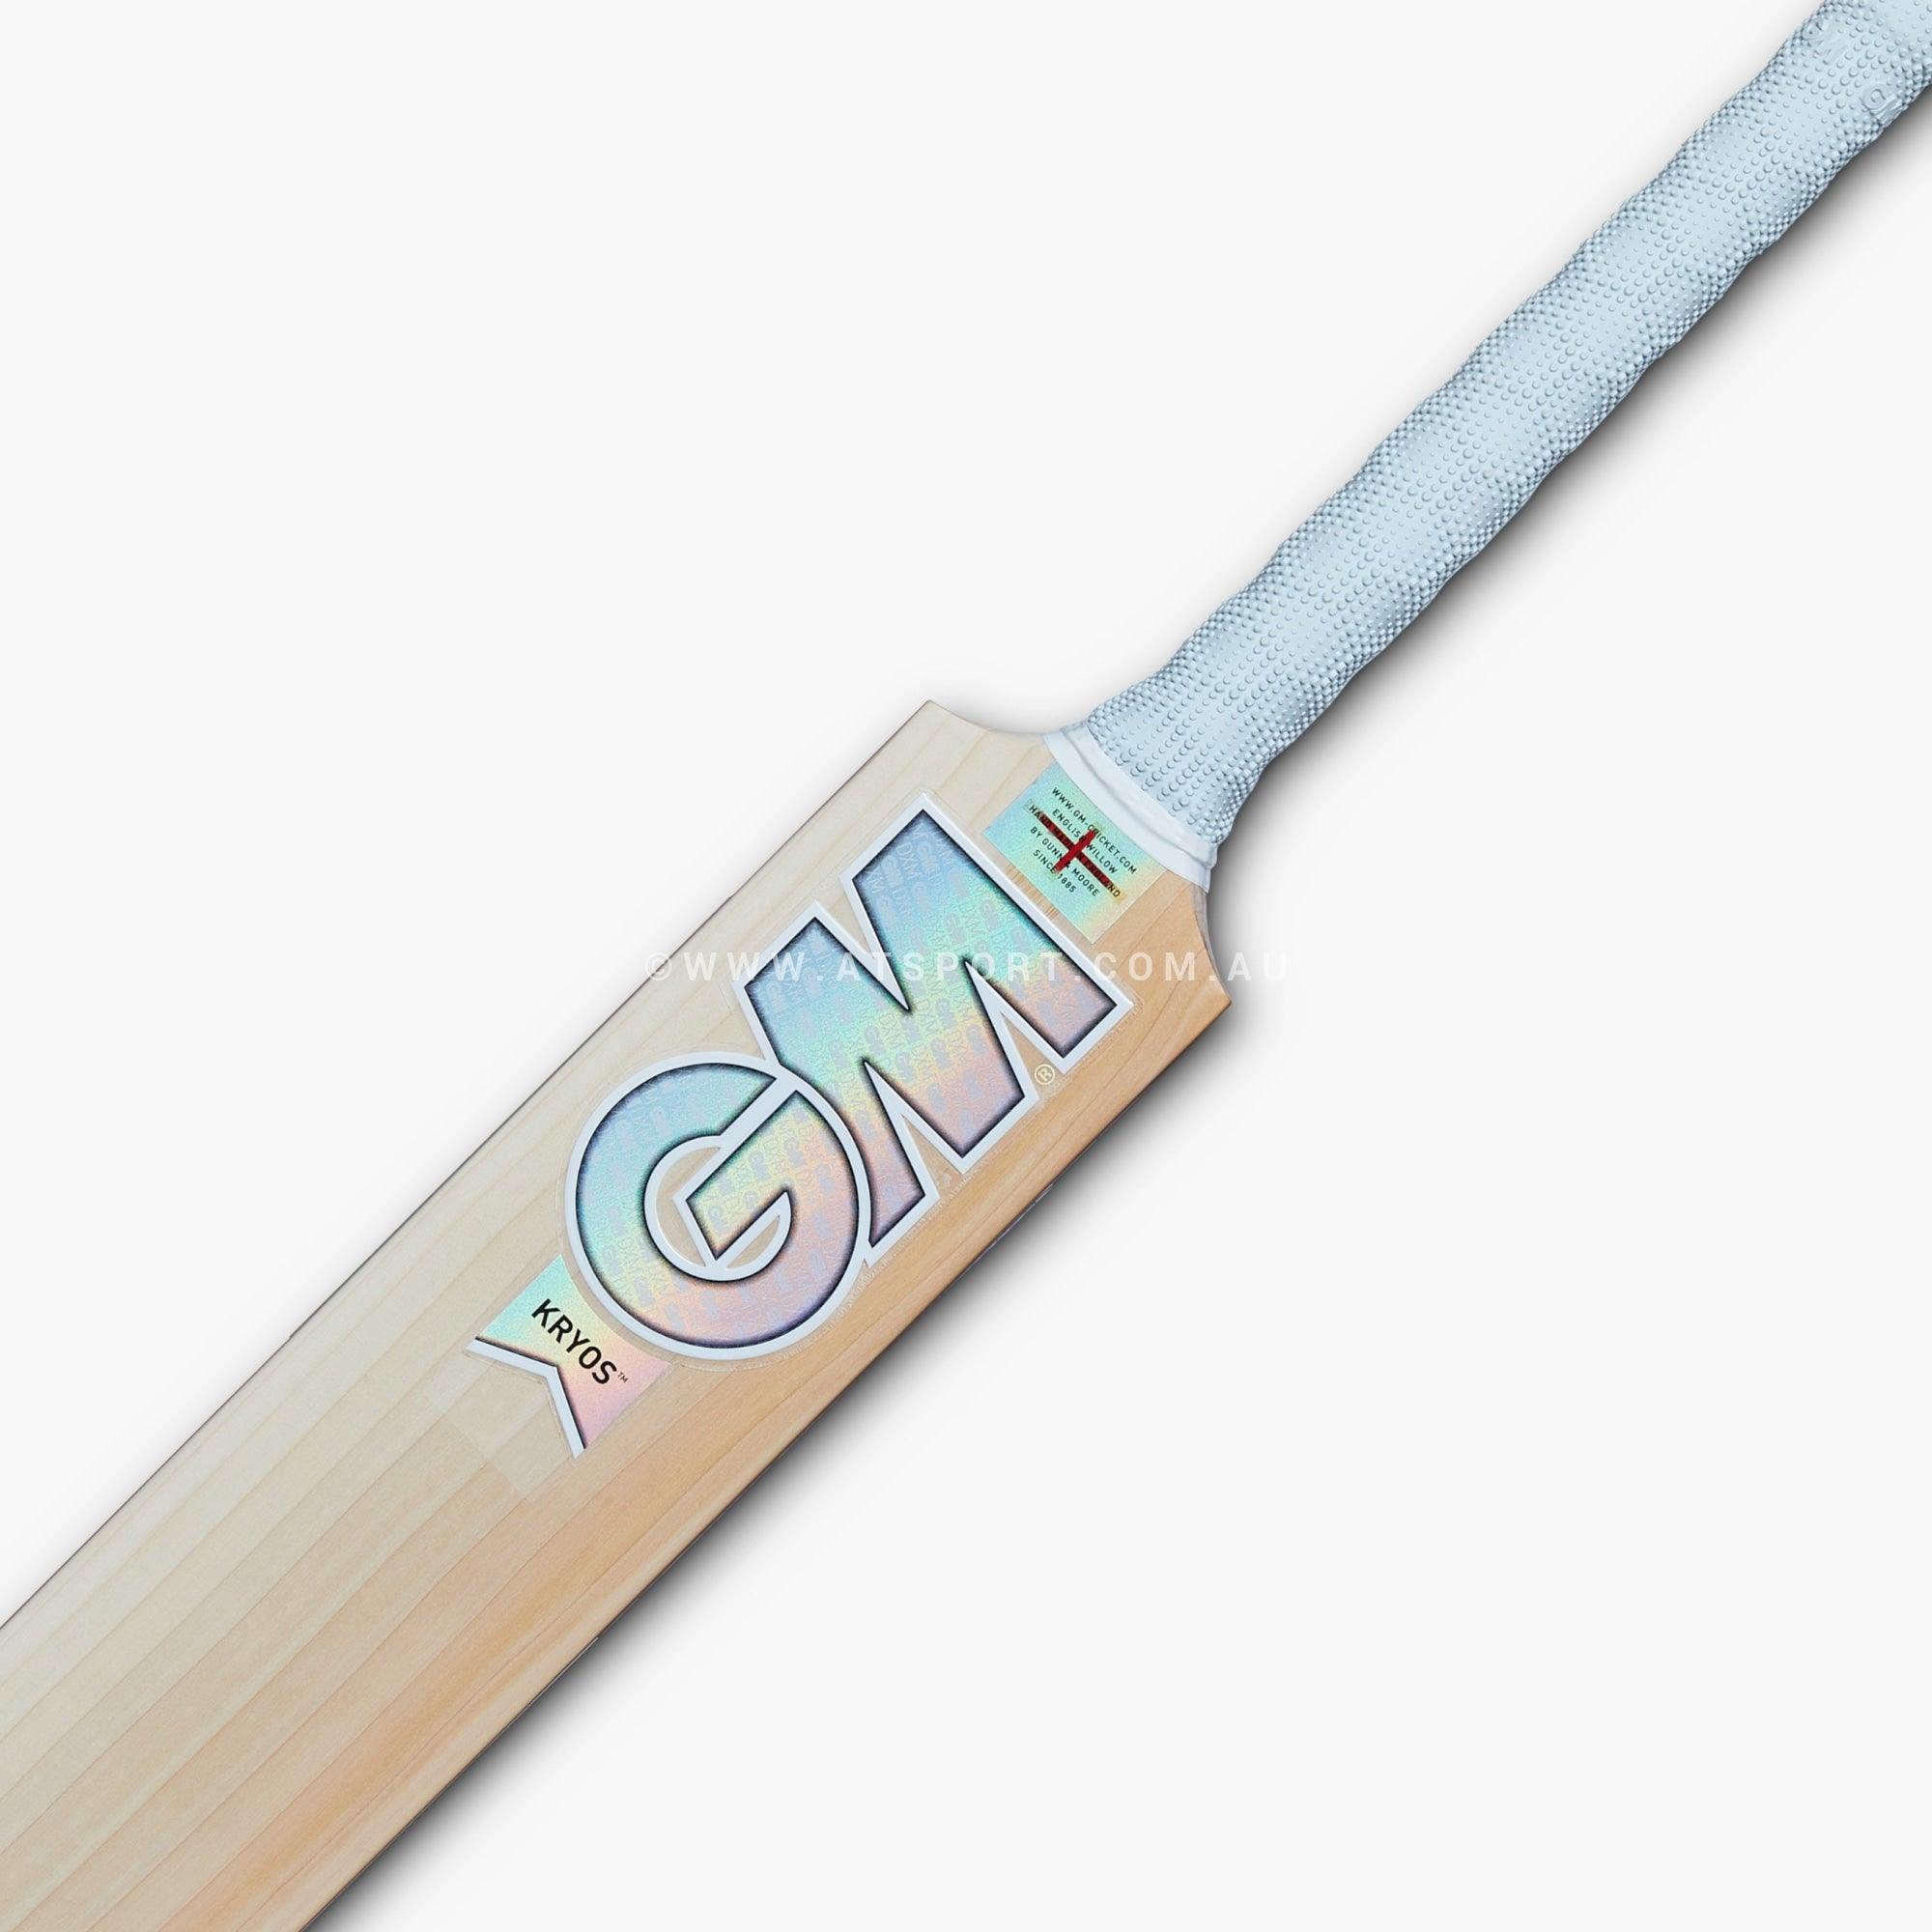 Gm Kryos Signature Dxm Ttnow L540 English Willow Cricket Bat - Sh Grade 2